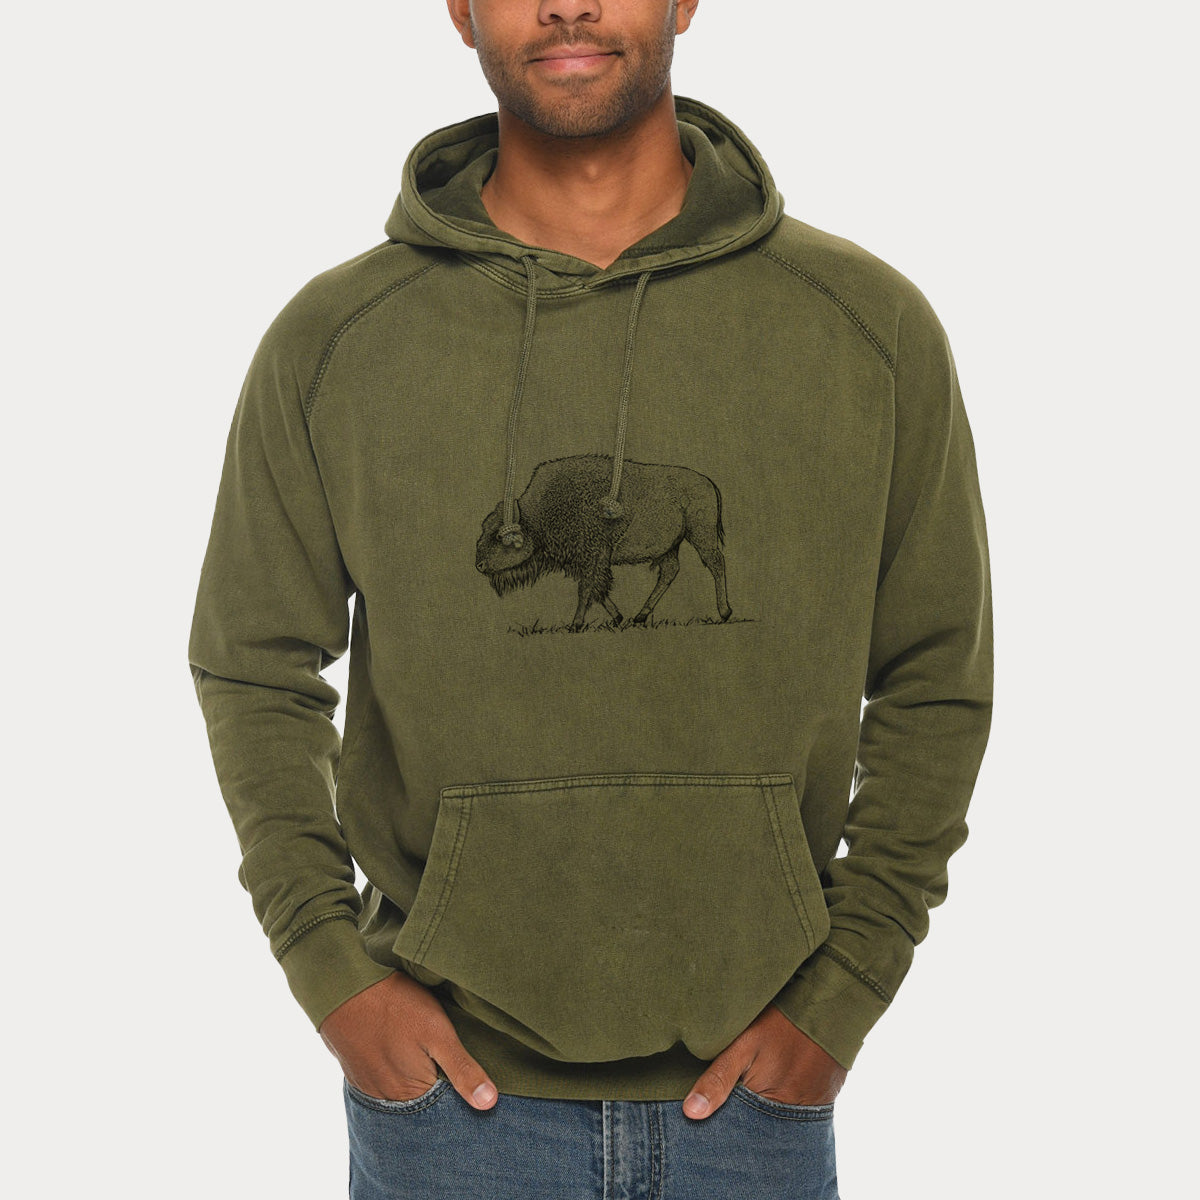 American Bison / Buffalo - Bison bison  - Mid-Weight Unisex Vintage 100% Cotton Hoodie